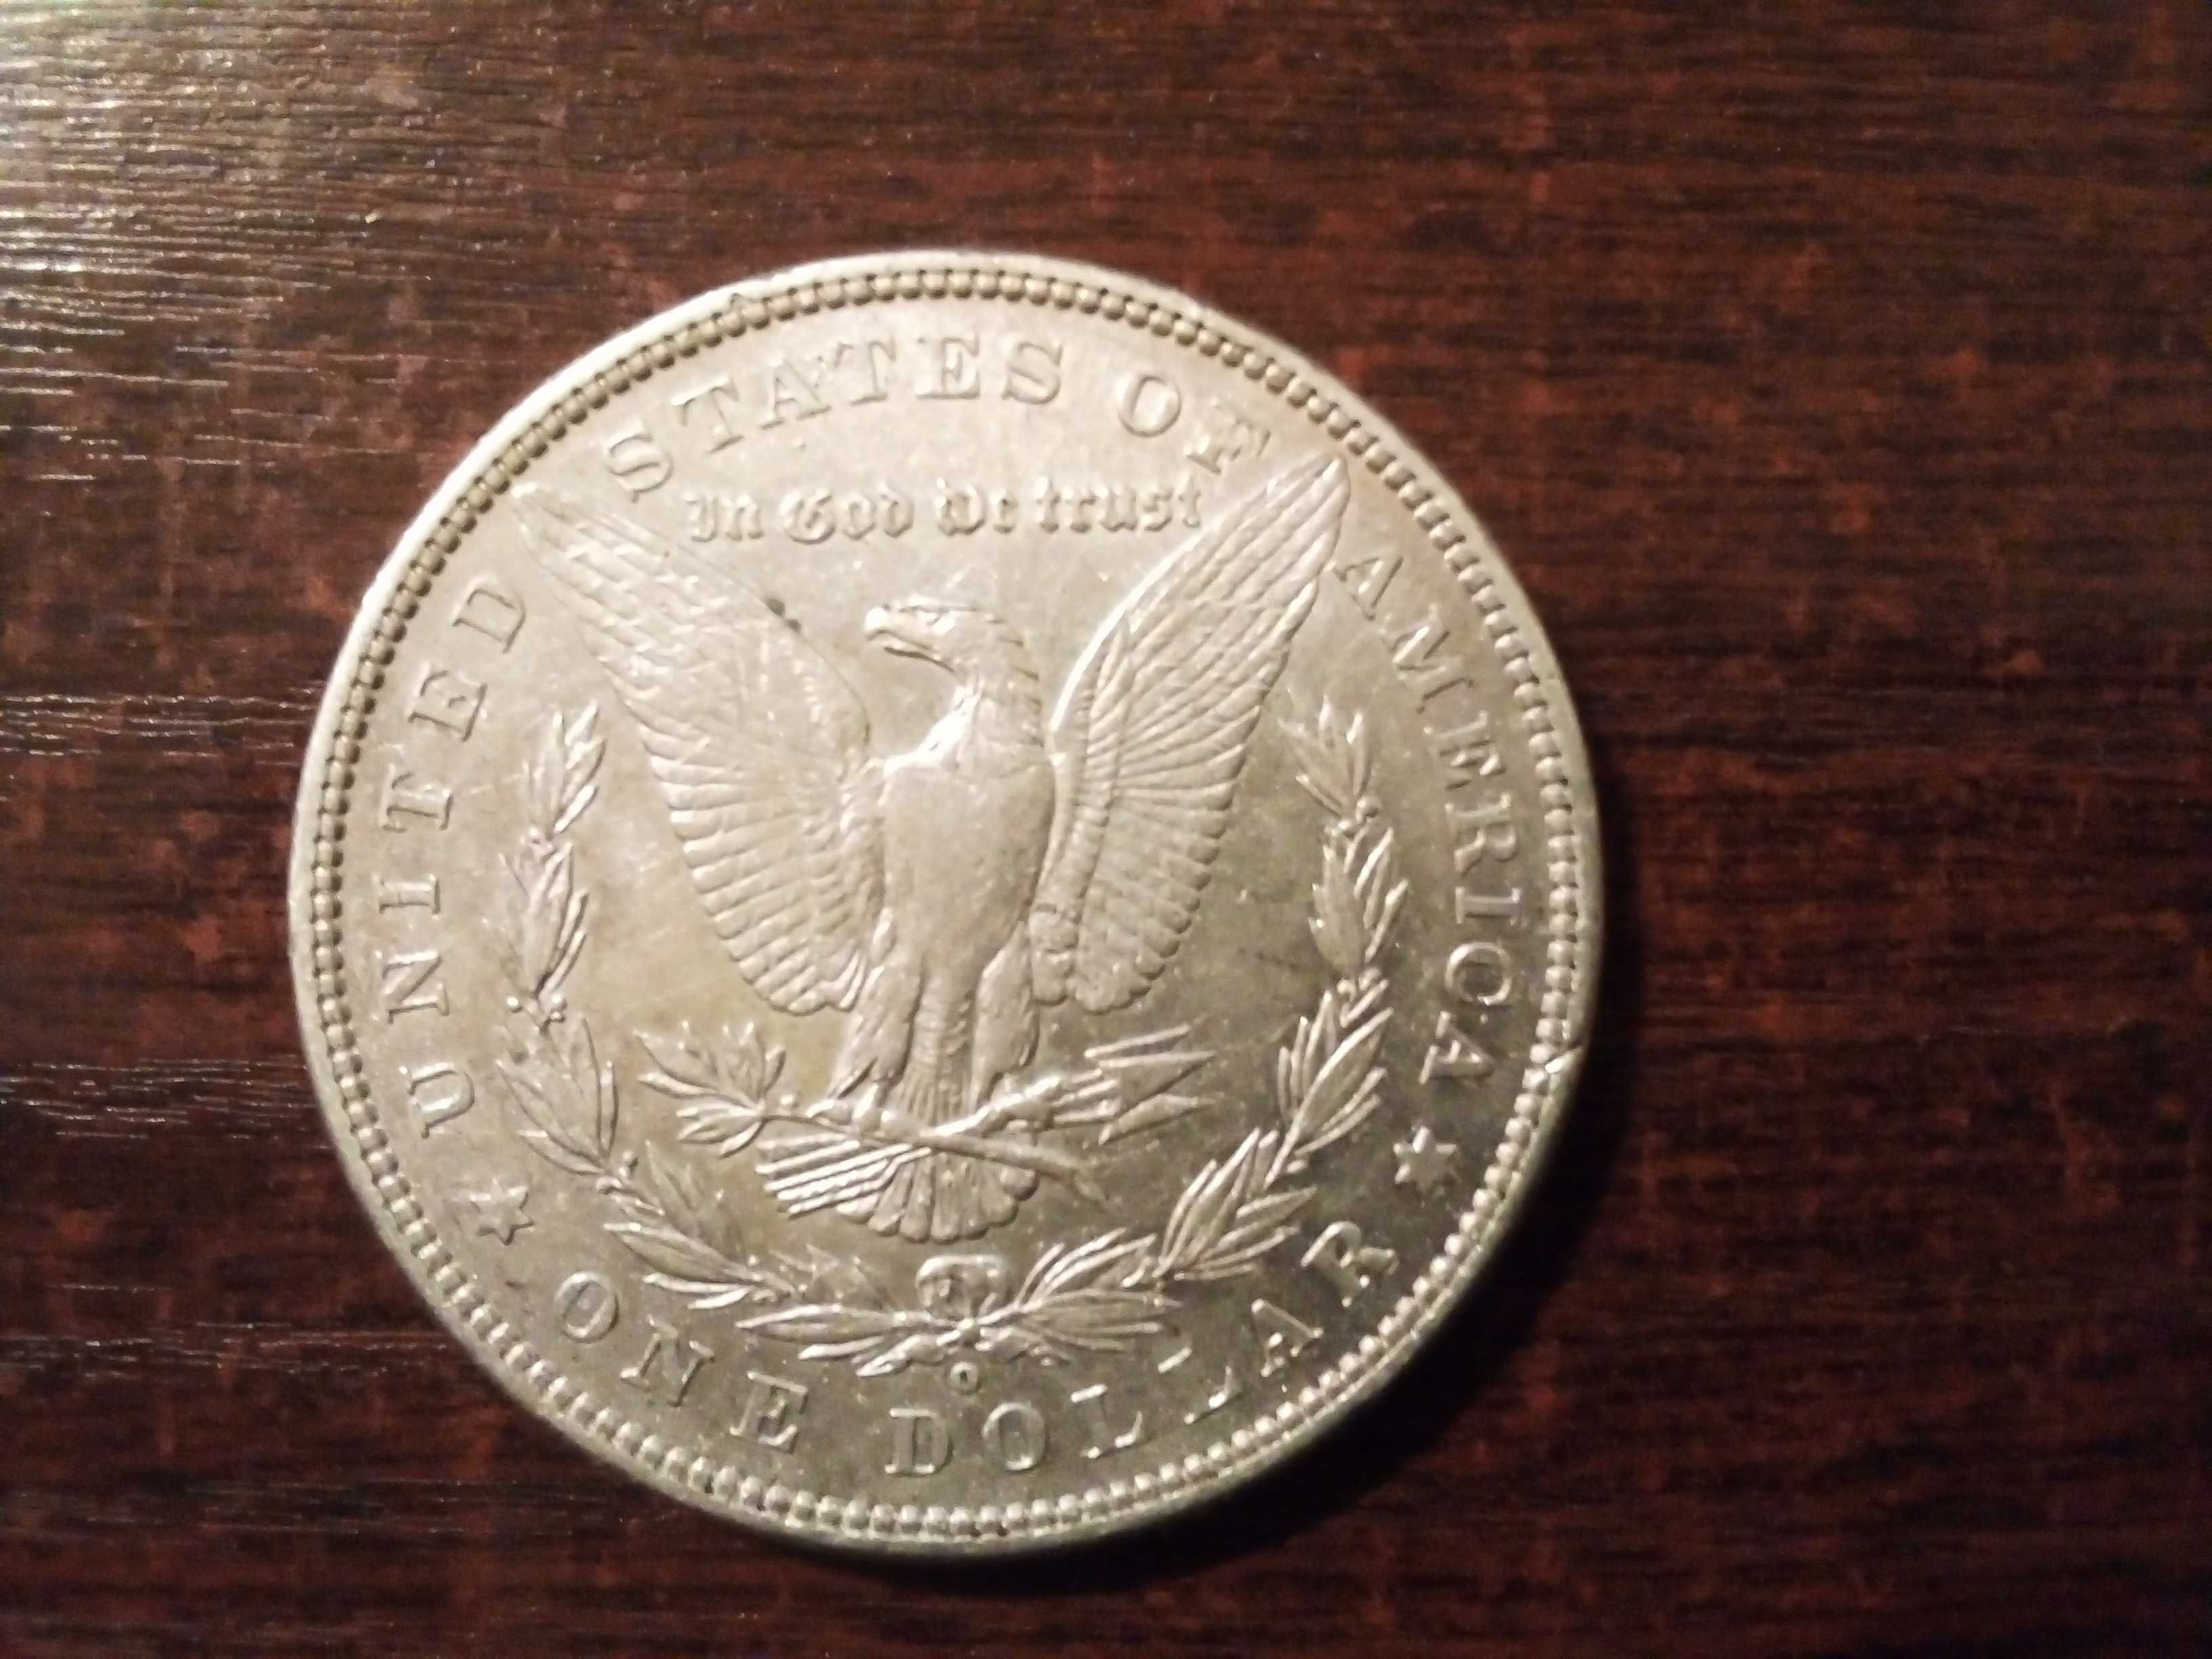 Moneta 1 dolar USA 1880